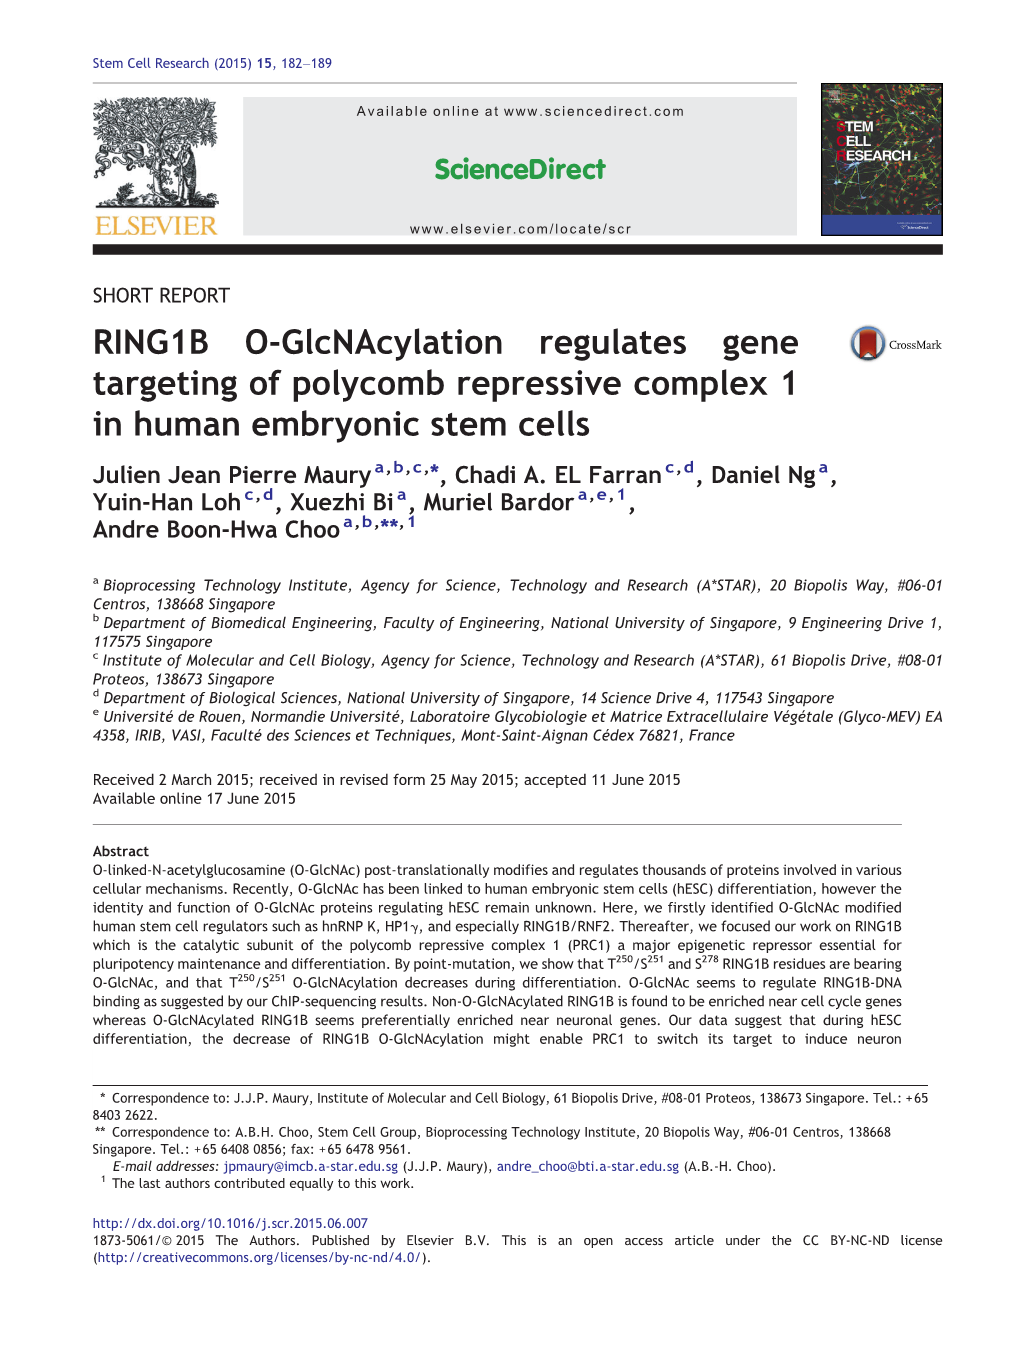 RING1B O-Glcnacylation Regulates Gene Targeting of Polycomb Repressive Complex 1 in Human Embryonic Stem Cells Julien Jean Pierre Maury A,B,C,⁎, Chadi A